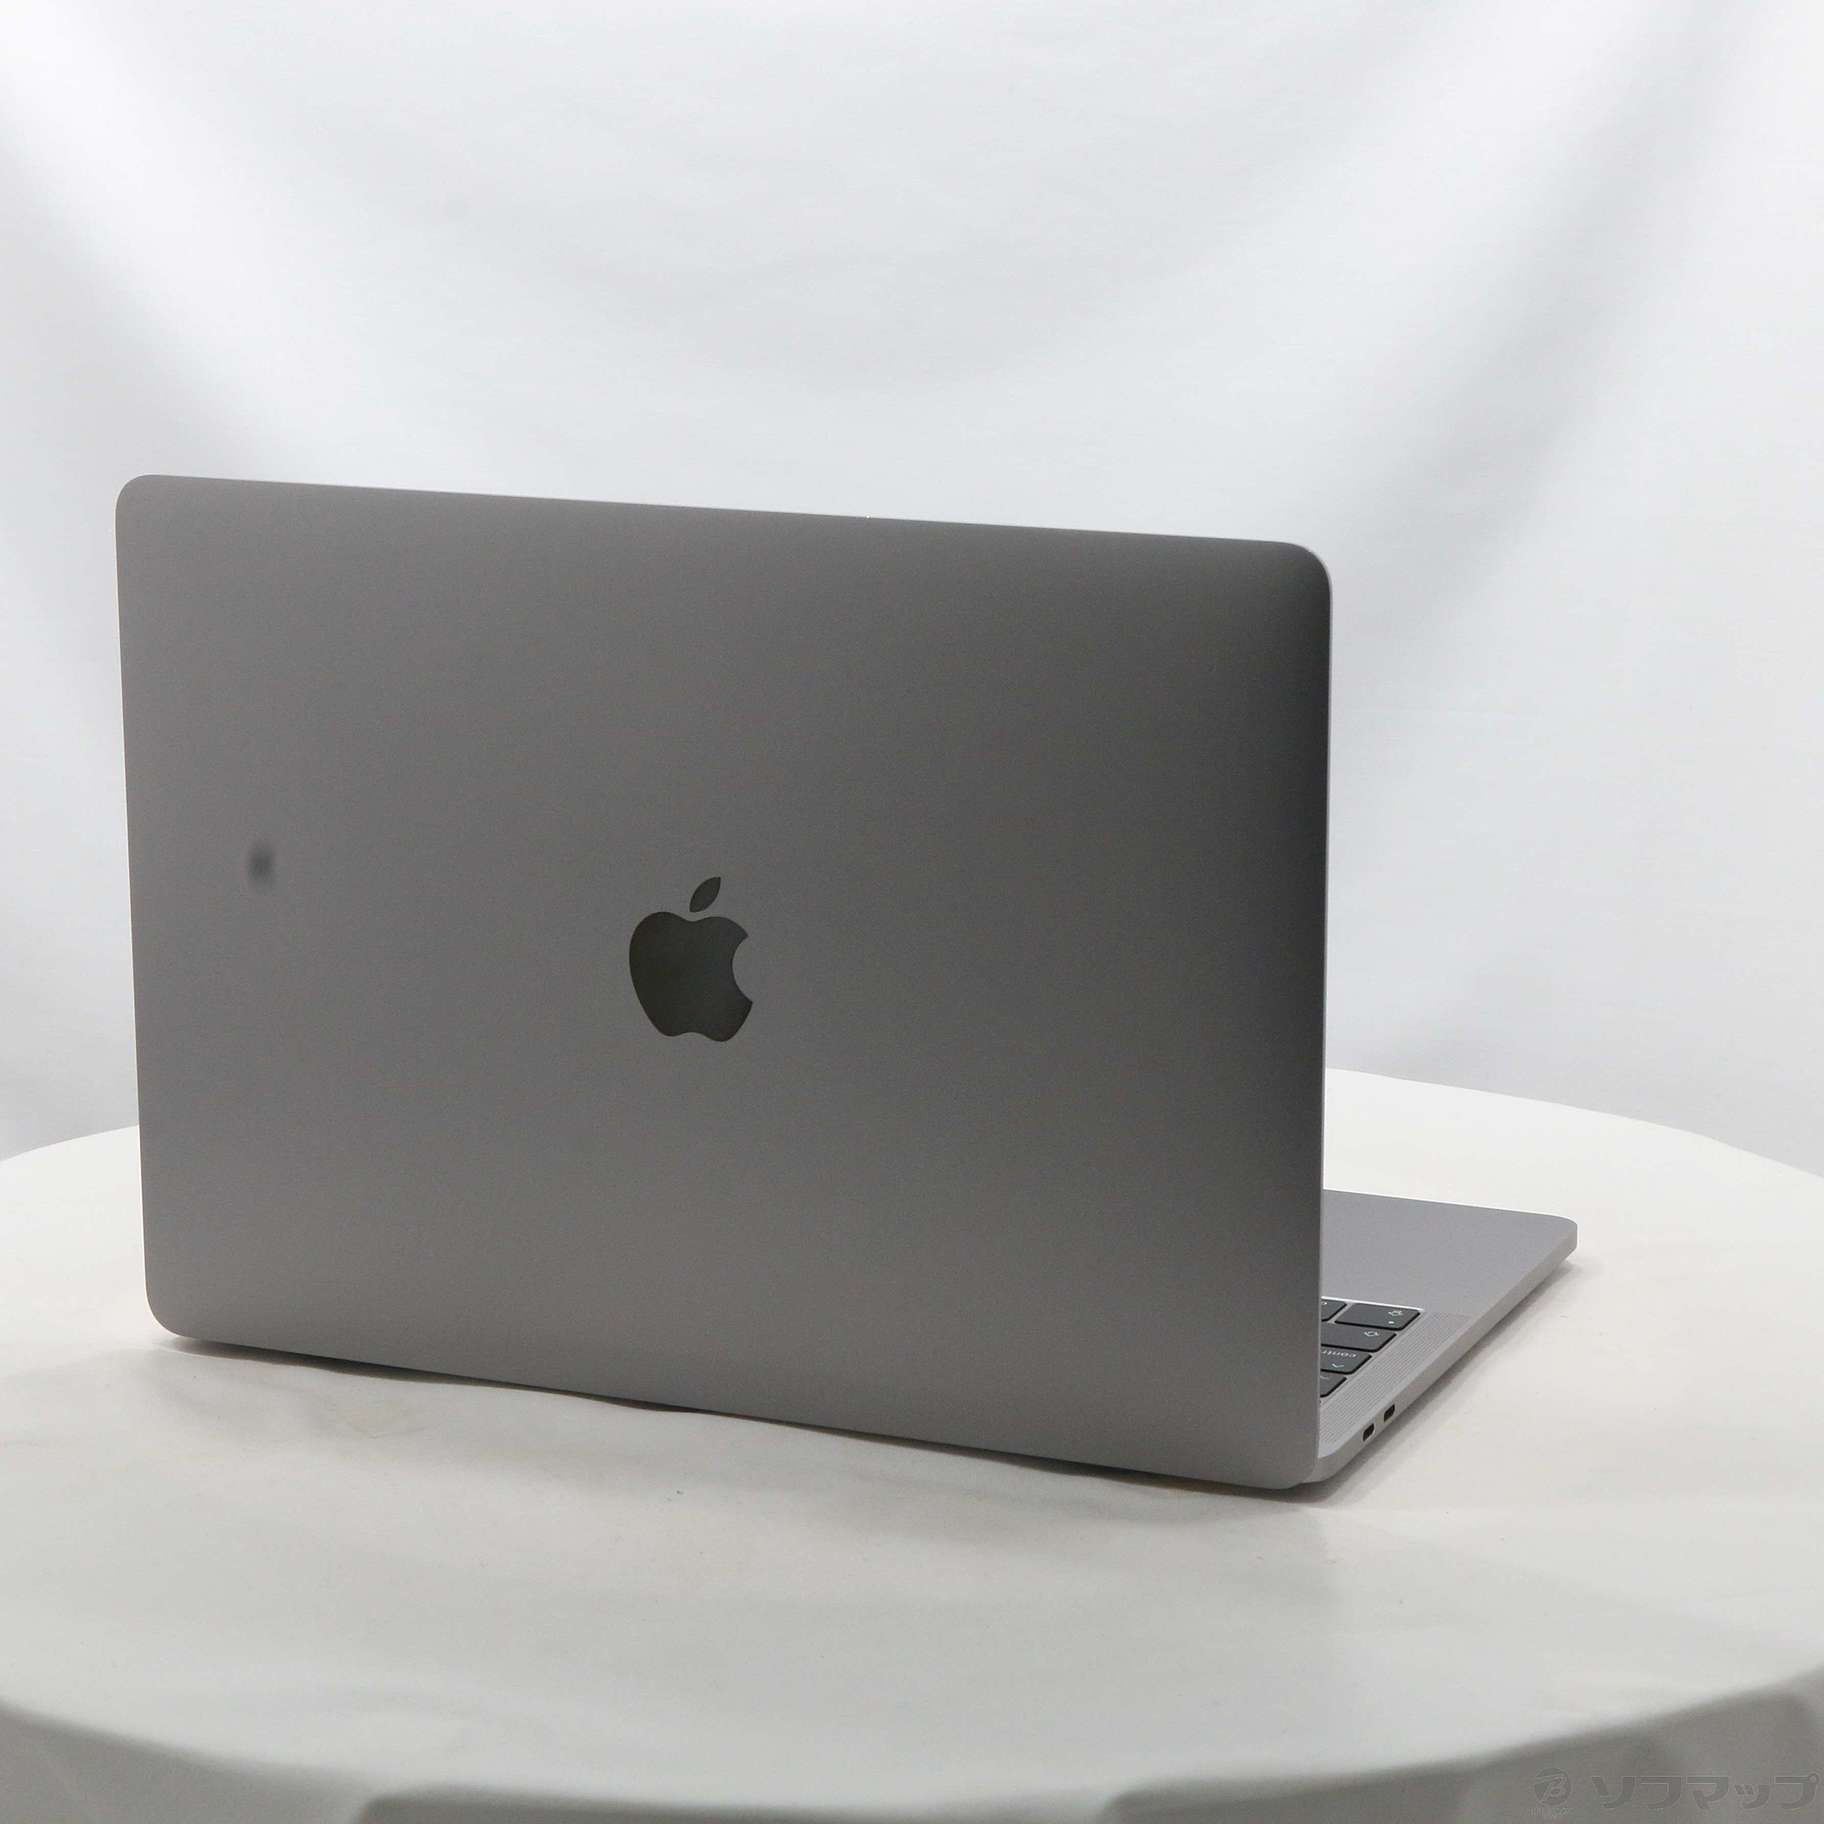 中古】MacBook Pro 13.3-inch Mid 2019 MV972J／A Core_i7 2.8GHz 16GB